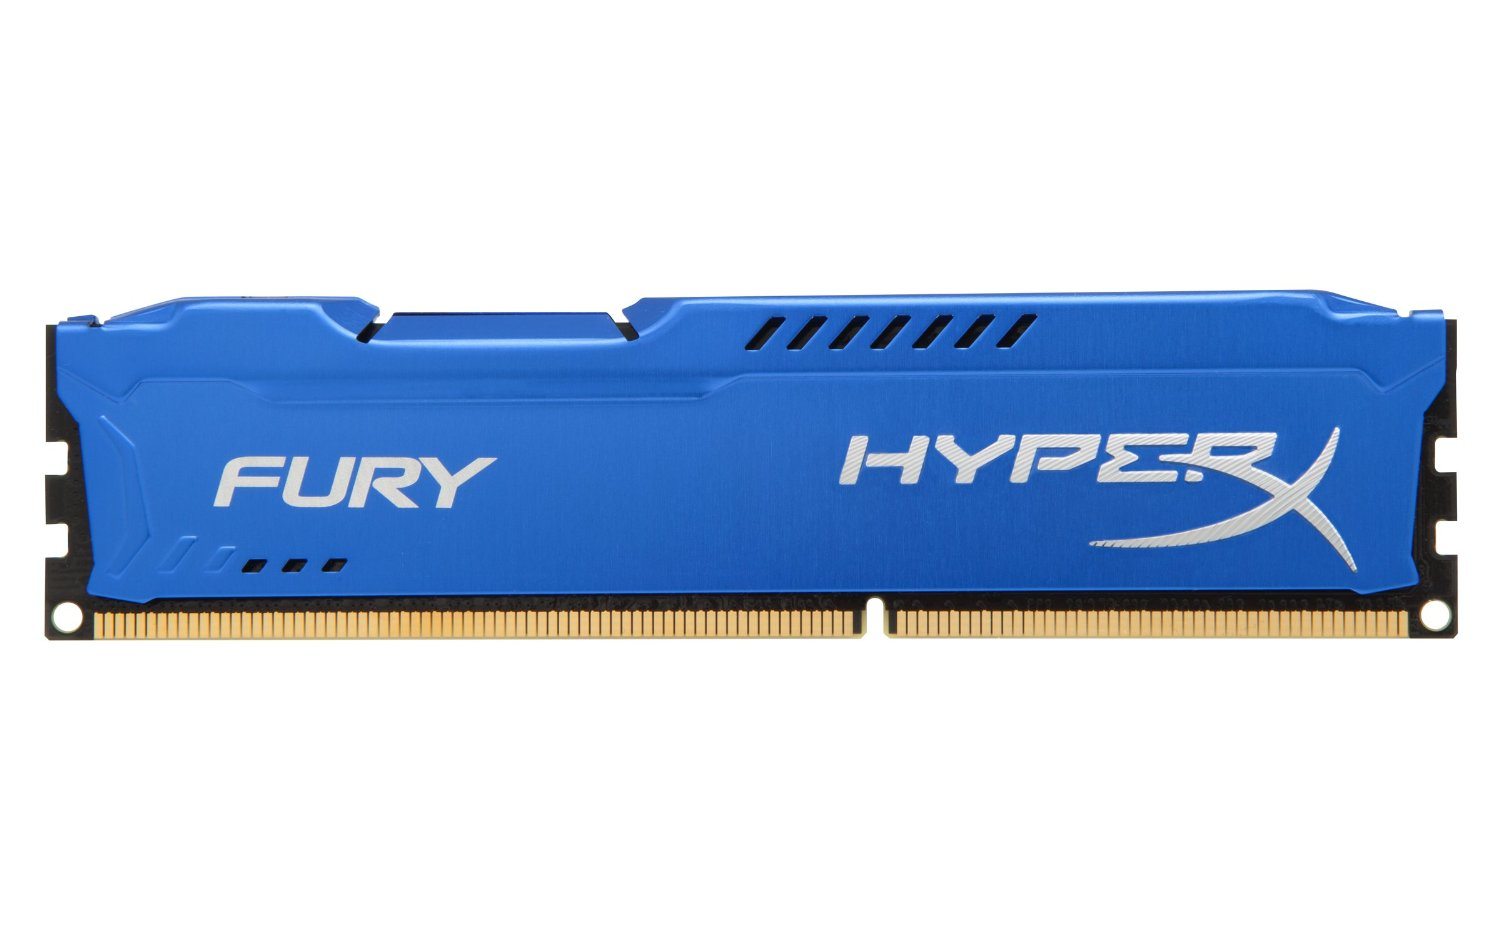 HyperX Fury - Memoria RAM de 8 GB (1600 MHz DDR3 Non-ECC CL10 DIMM), Color Azul